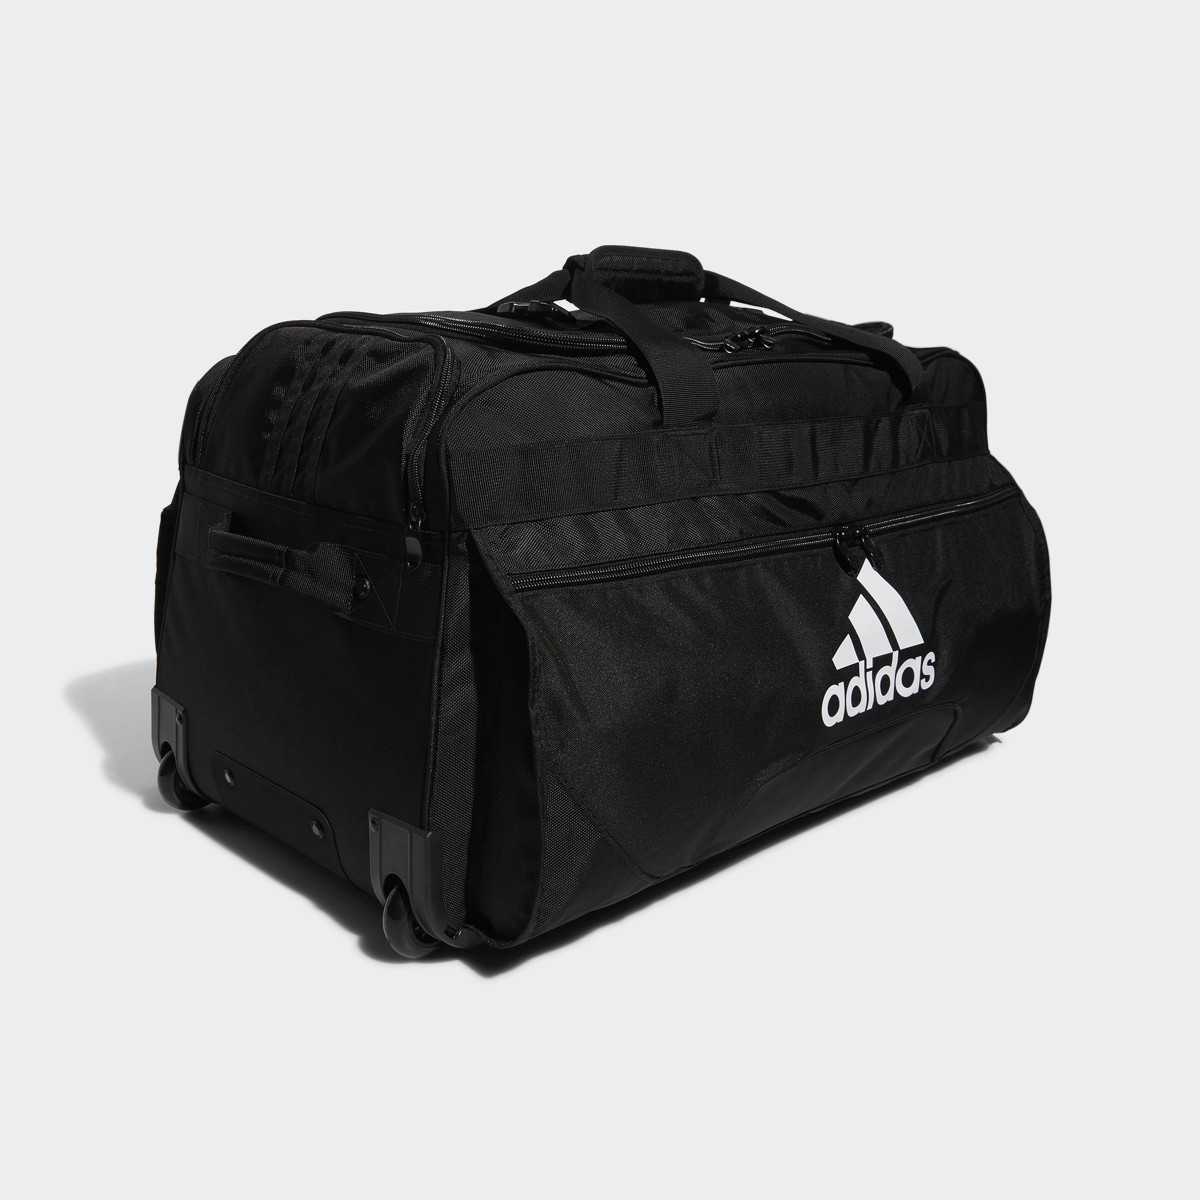 Adidas Team Wheel Bag. 4